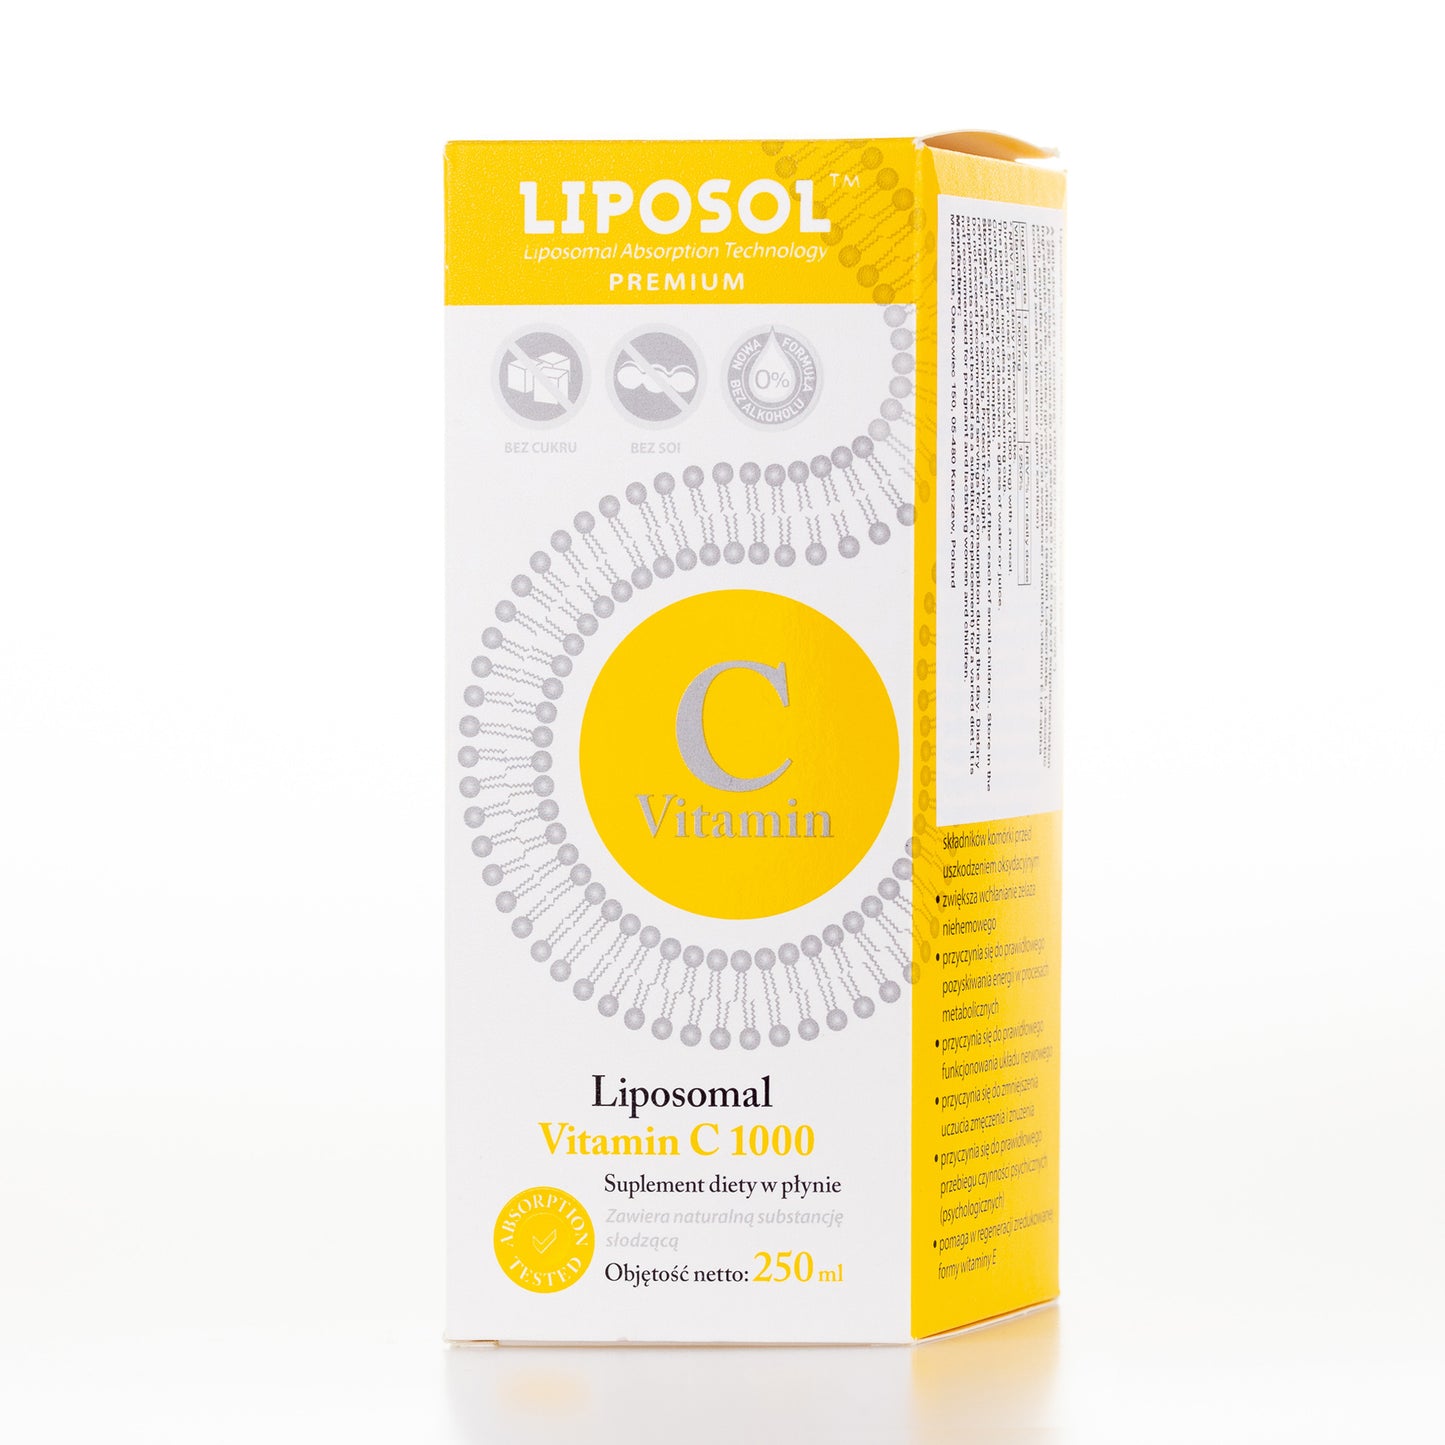 250ml of Liposomal Vitamin C 1000mg, natural taste, buffered, Liposol, Aliness